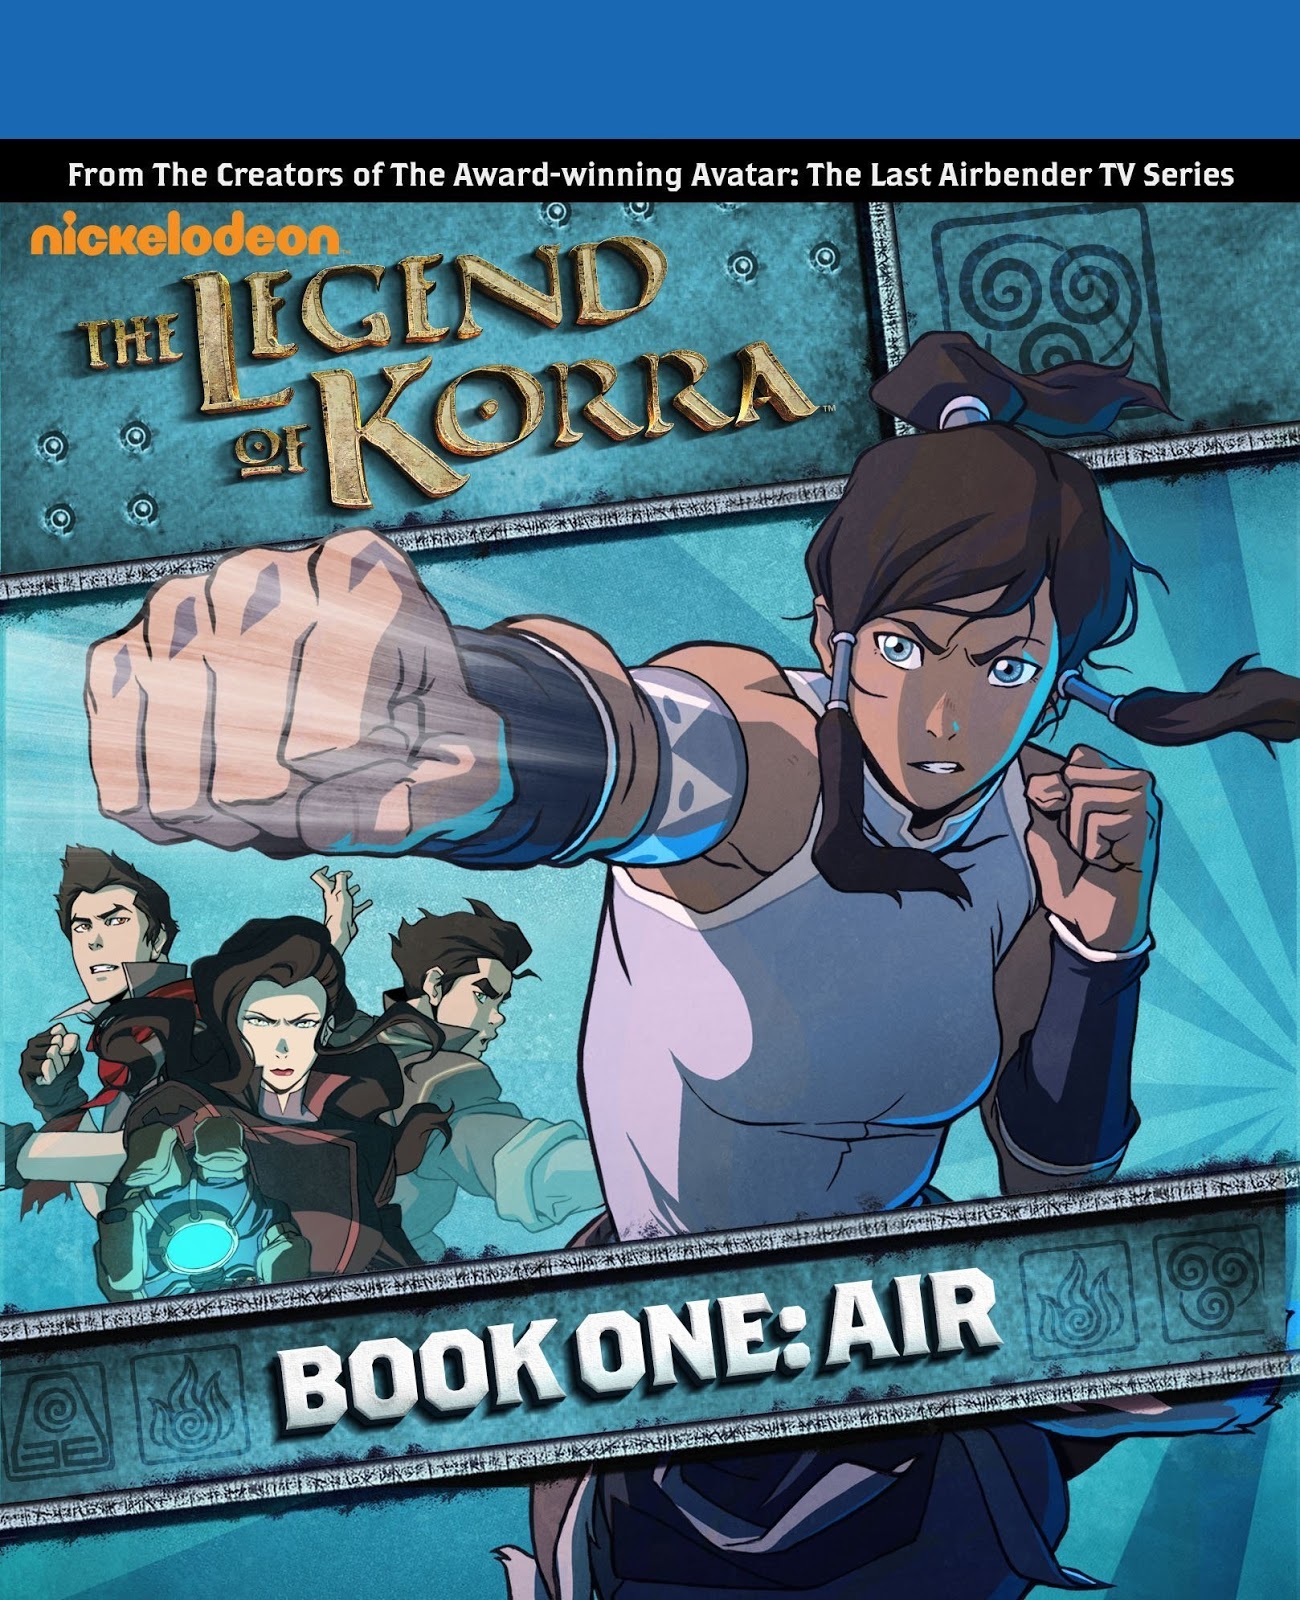 Avatar The Legend of Korra : Book 1 [BATCH] Sub Indo - MegaBatch